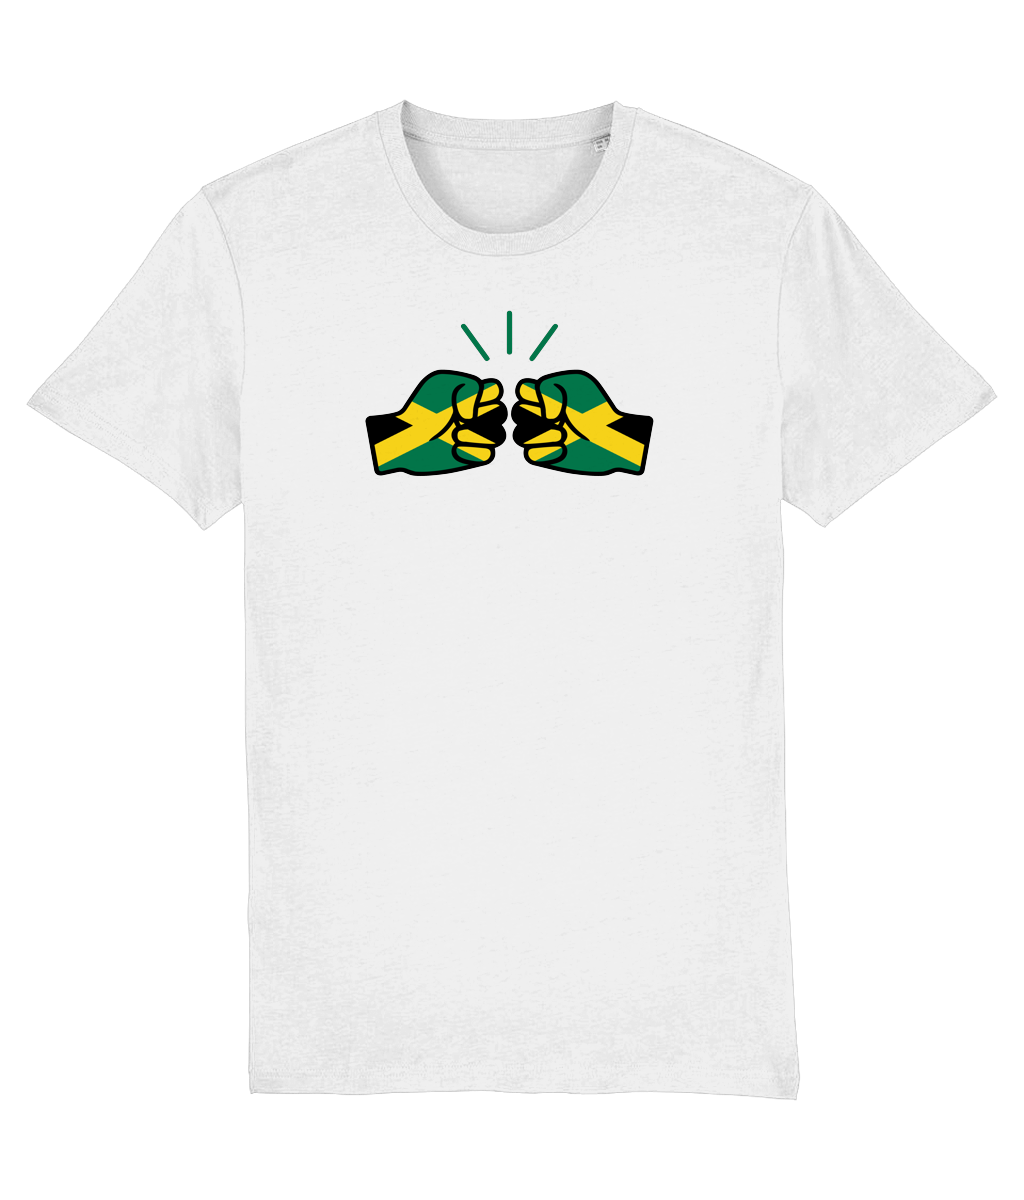 We Run Tings, Jamaica, Organic Ring Spun Cotton T-Shirt, Outline